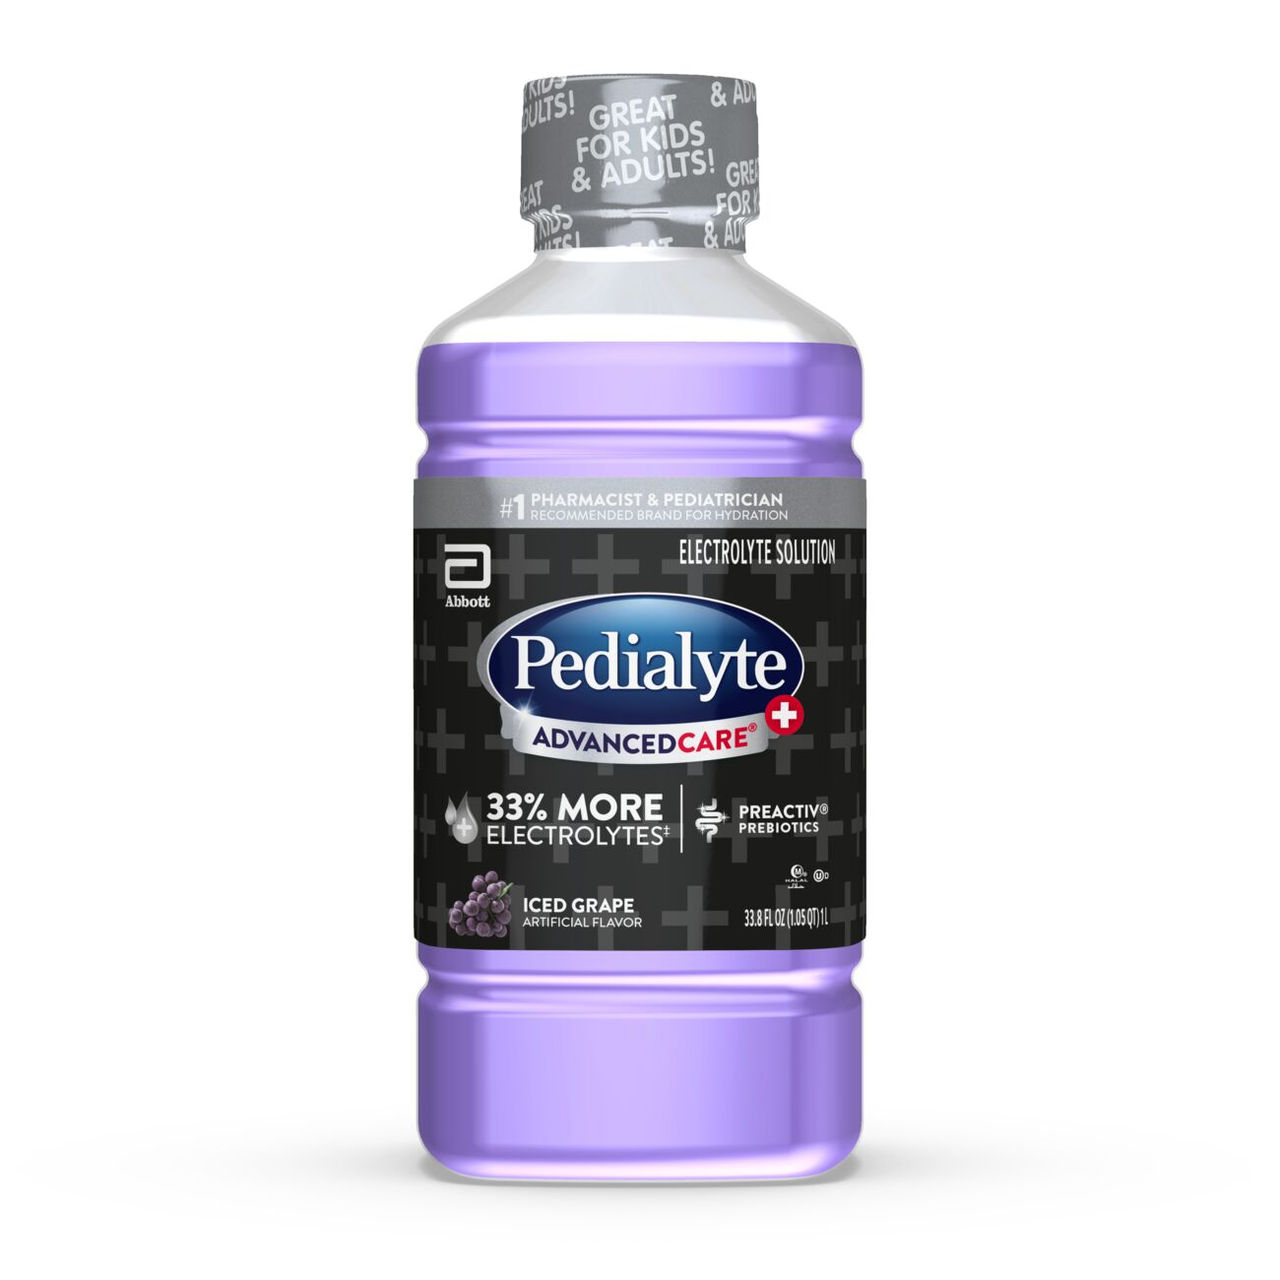 Pedialyte AdvanceCare Plus Iced Grape flavor